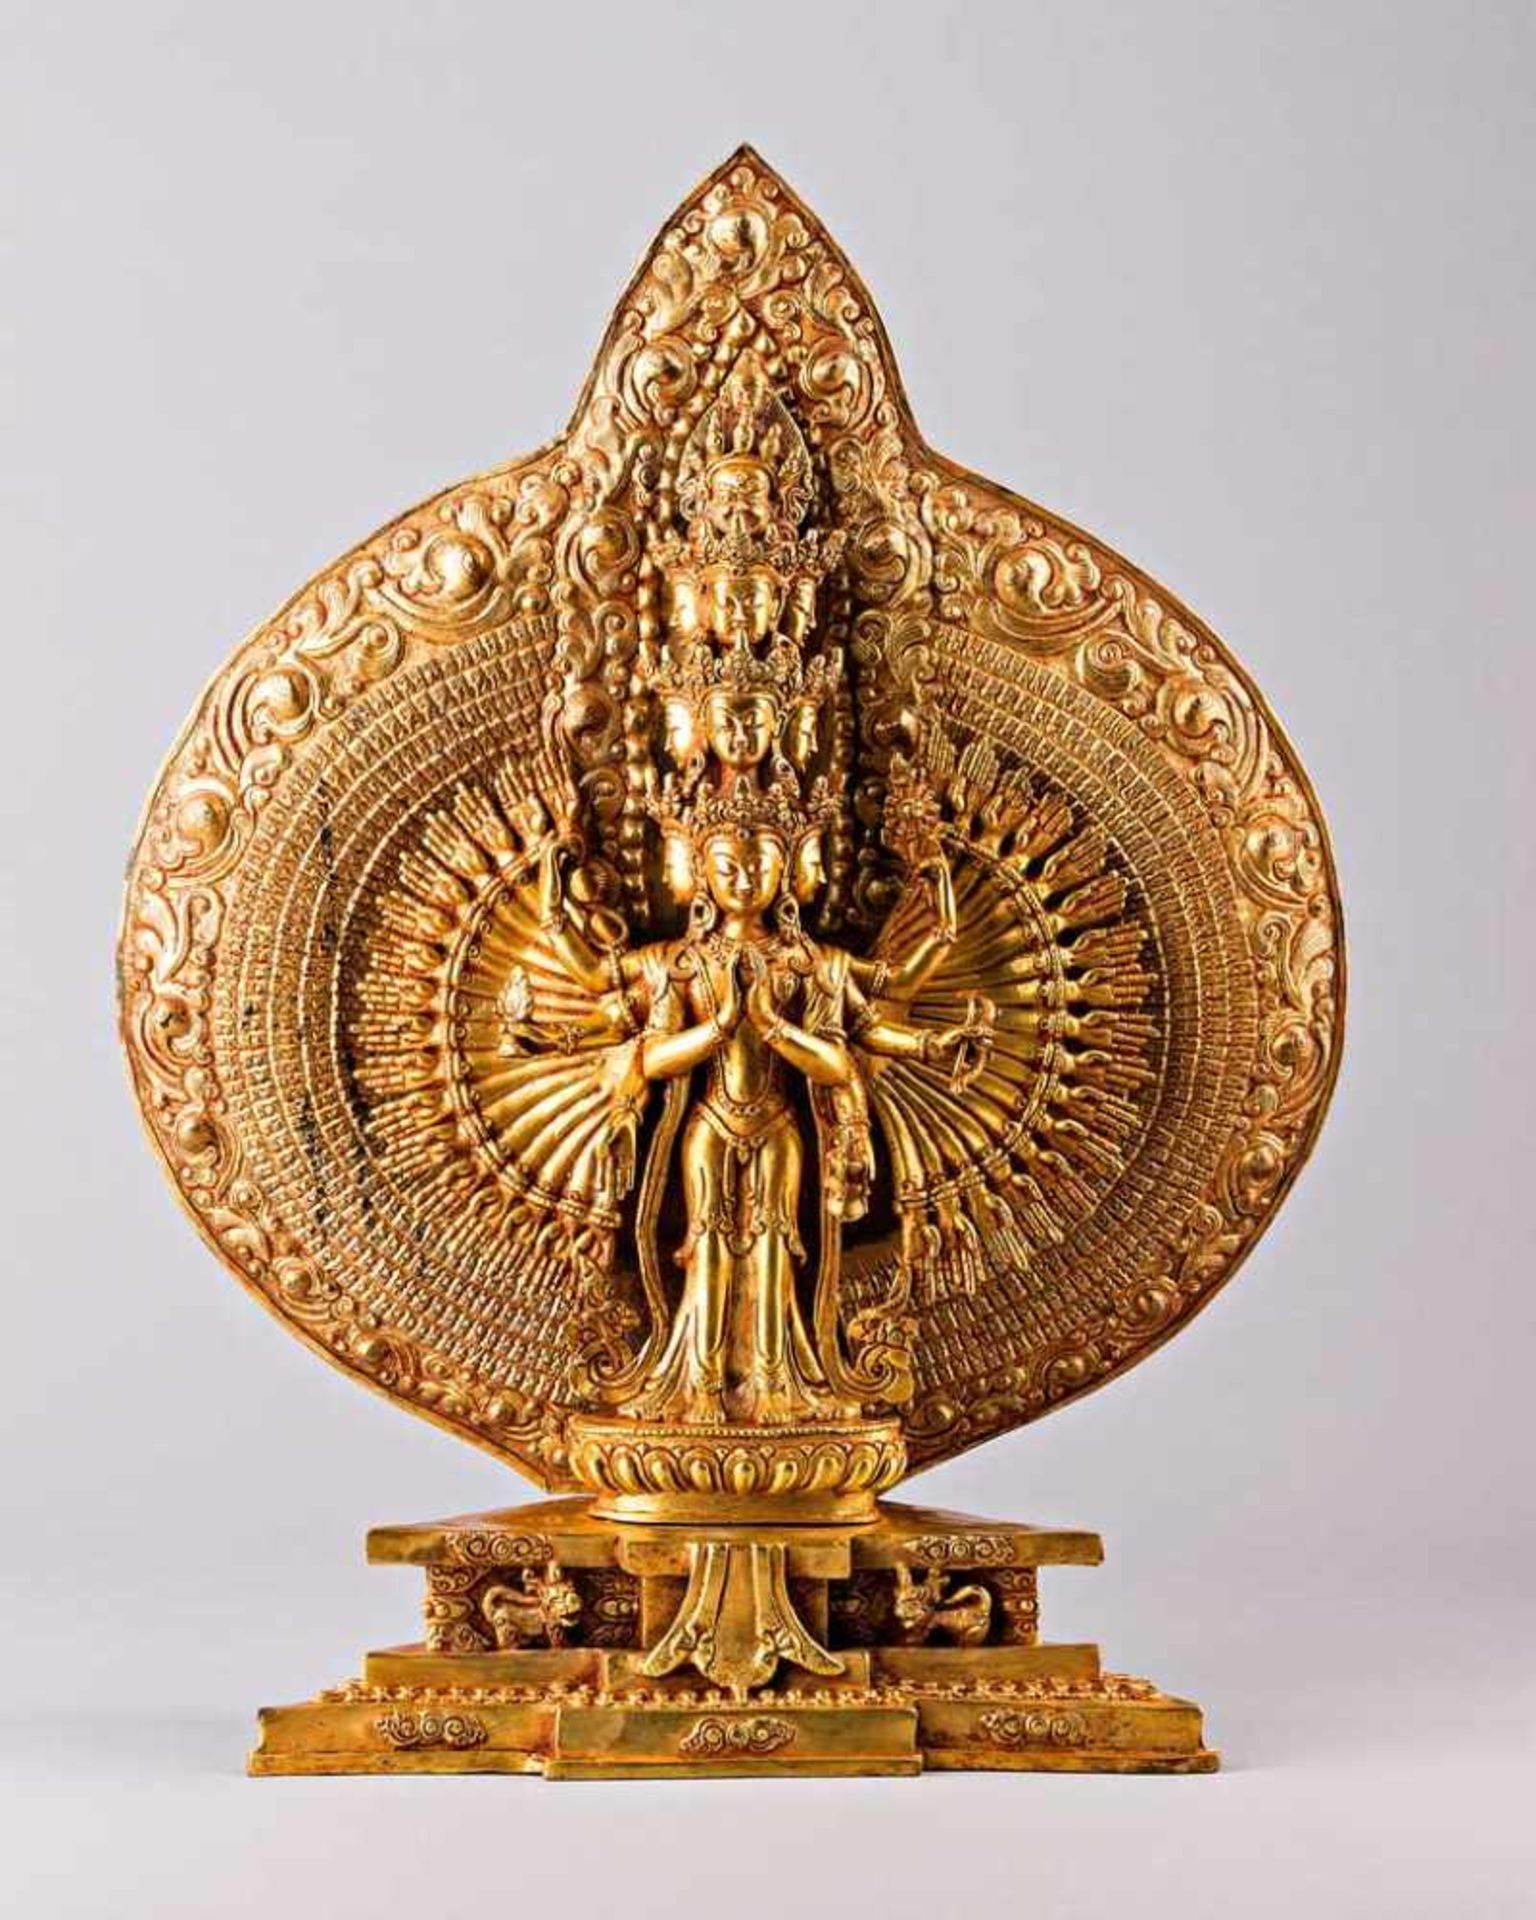 Stehender Bodhisattva Avalokitesvara auf getrepptem Sockel. Ornamental getriebene Aureole. Bronze